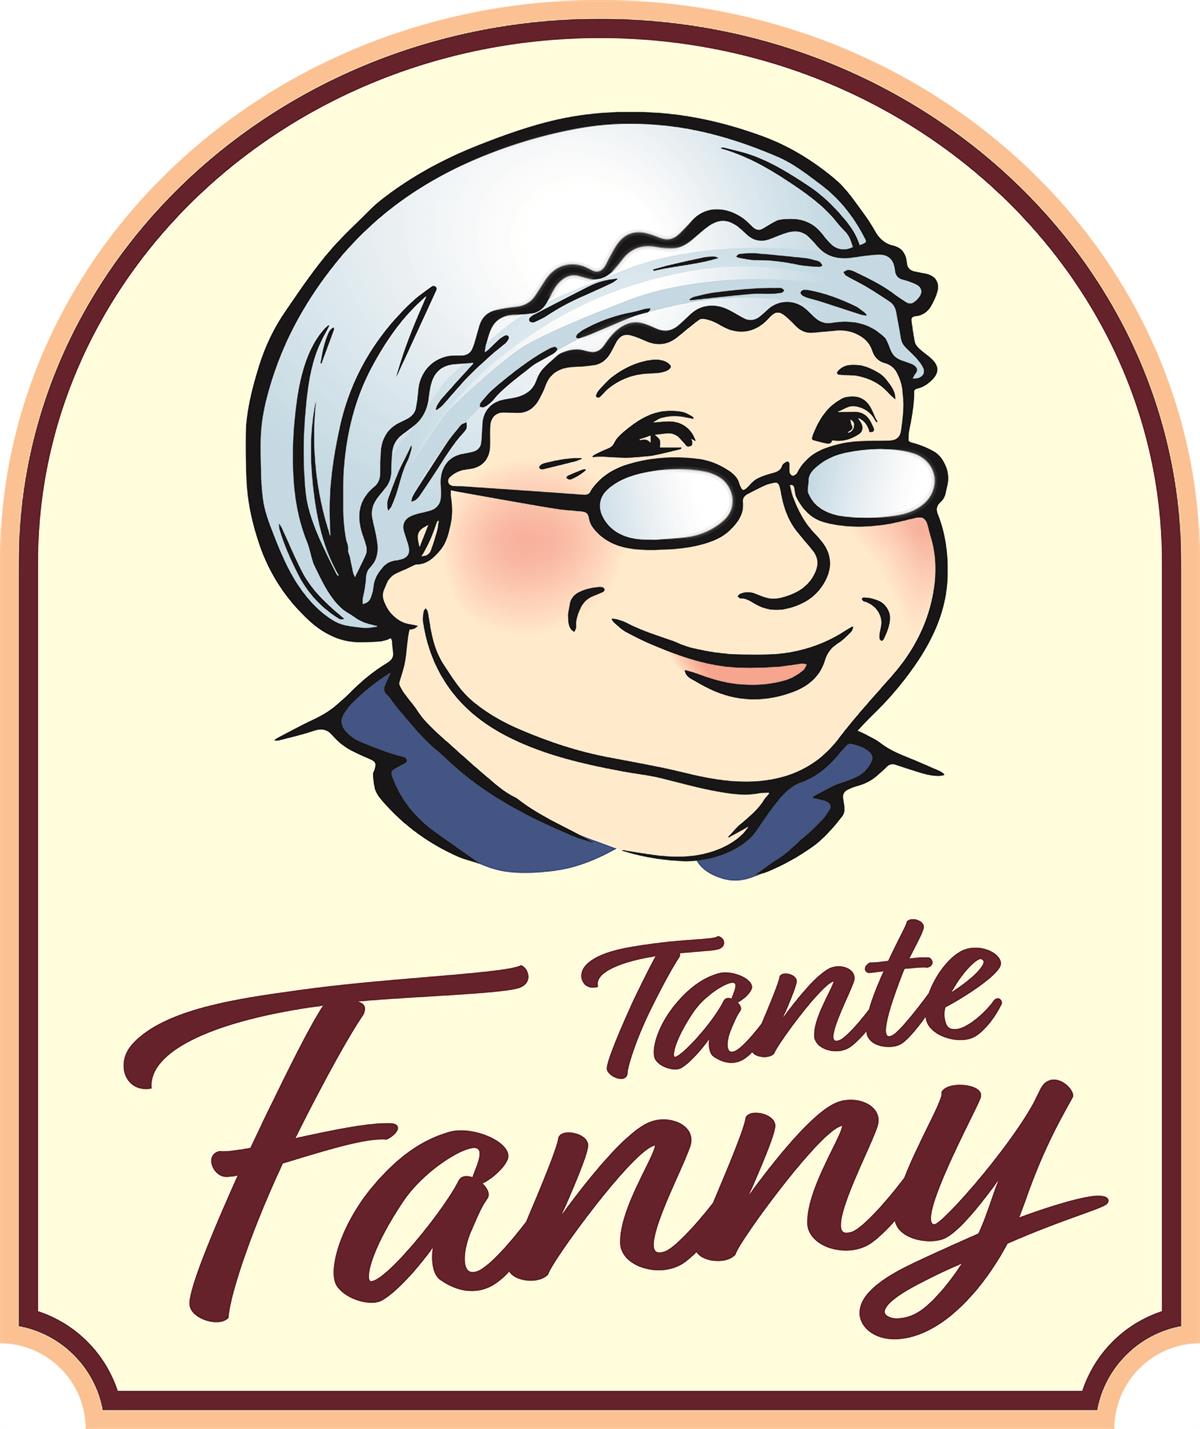 Tante Fanny Logo